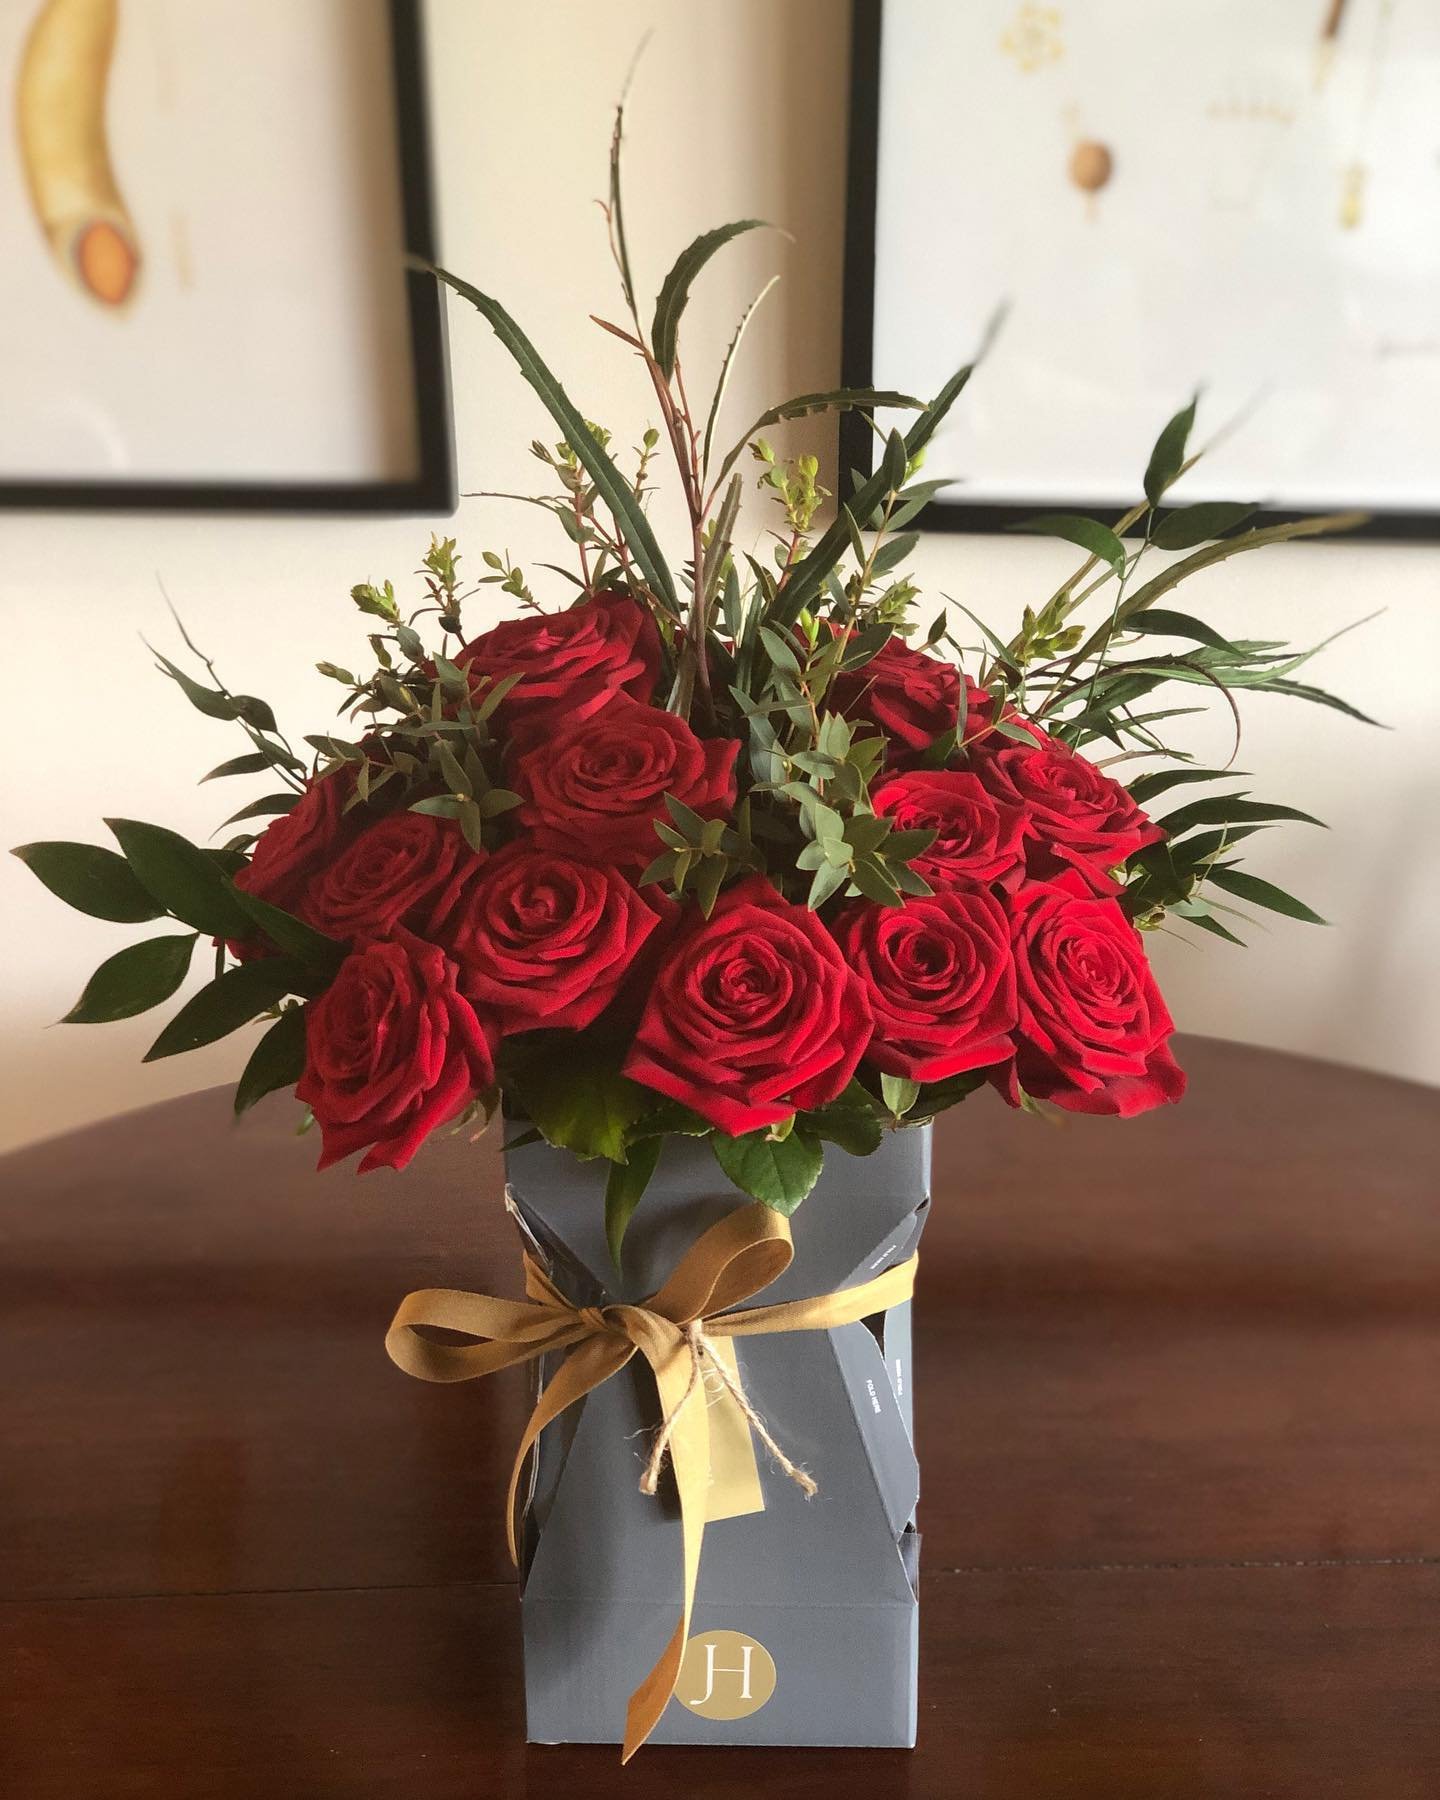 Gorgeous velvety red Roses to celebrate a wedding anniversary today🌹 .
.
.
#jh_floraldesign #florist #stratfordflorist #shoplocal #smalllocalbusiness #flowers #giftbouquets #bouquets #weddingflorist #funeralflowers #forestofdean #corporateflowers #s